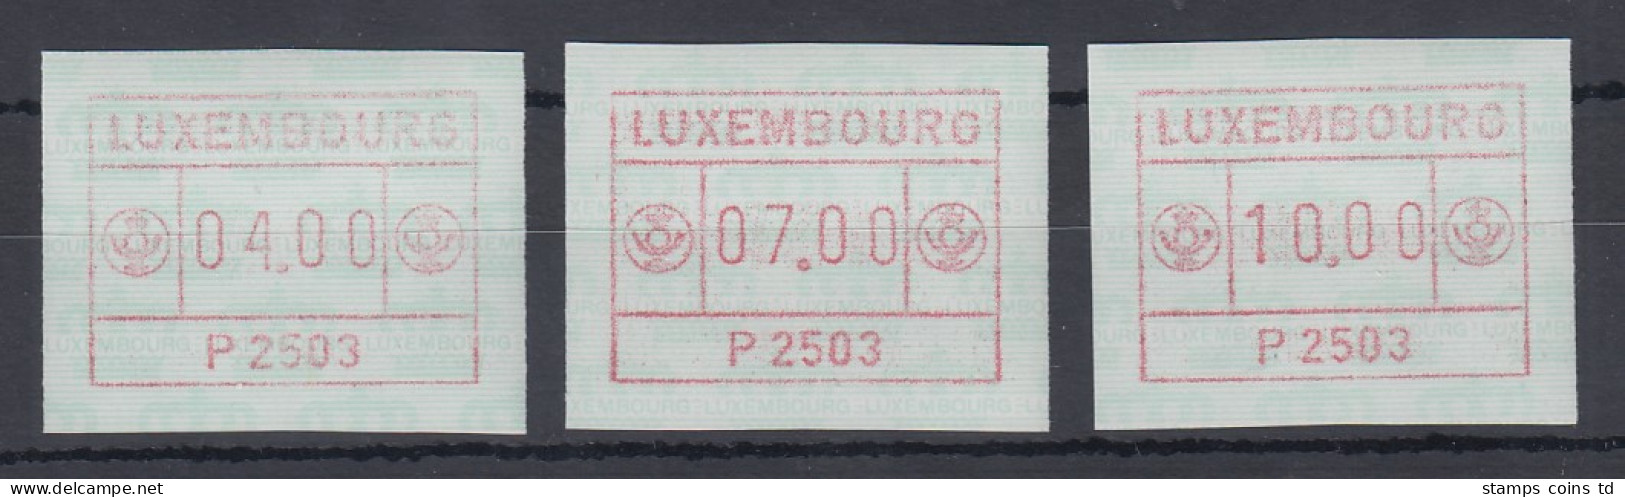 Luxemburg ATM P2503 Tastensatz 4-7-10 ** - Frankeervignetten